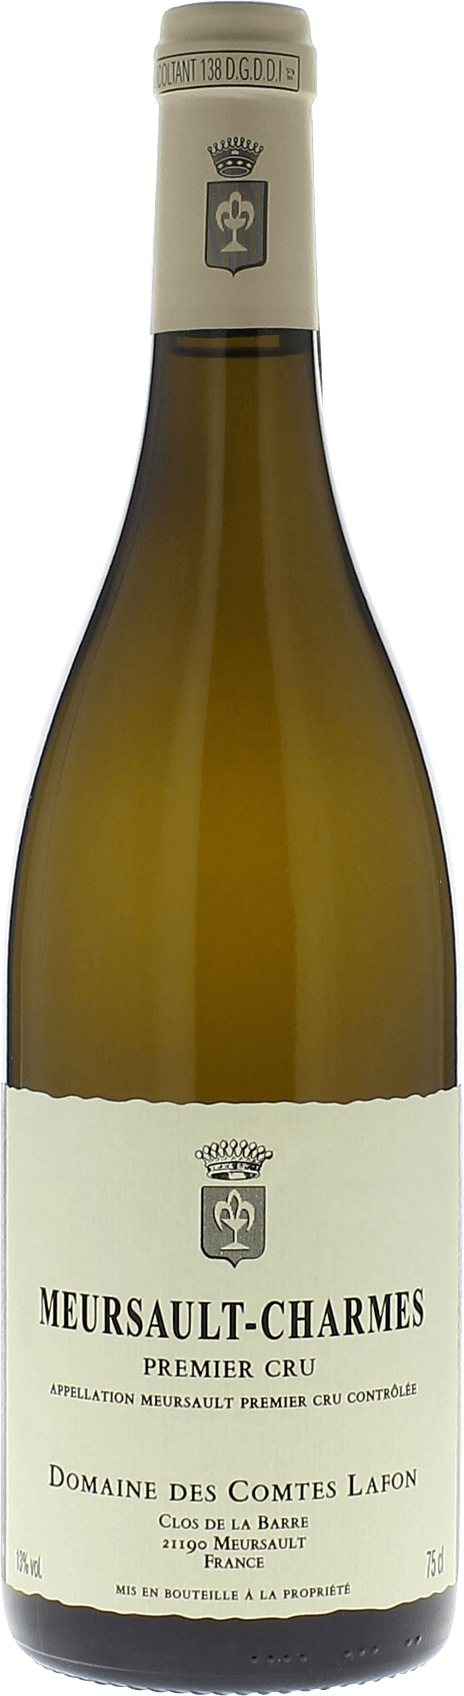 Meursault charmes 1er cru 2015 Domaine Comtes LAFON, Bourgogne blanc